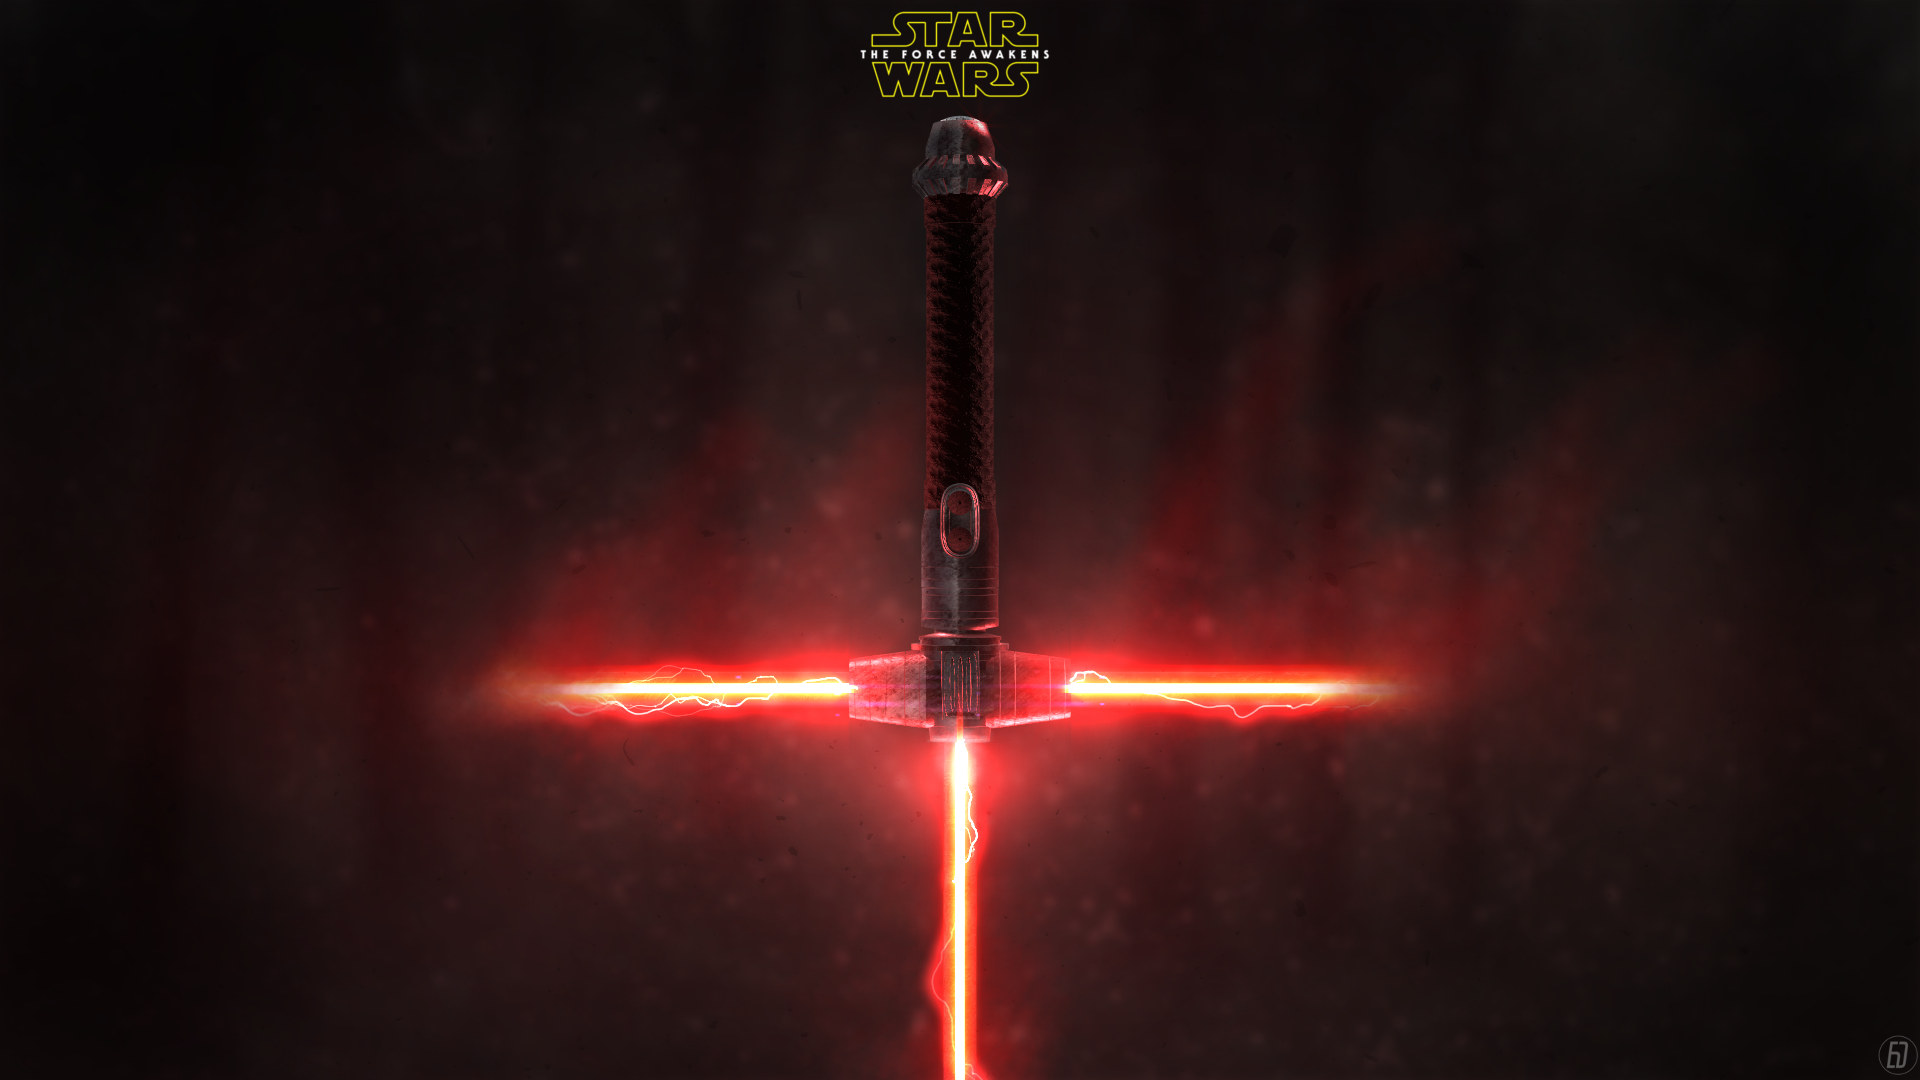 Wars The Force Awakens New Lightsaber By Spiritdsgn